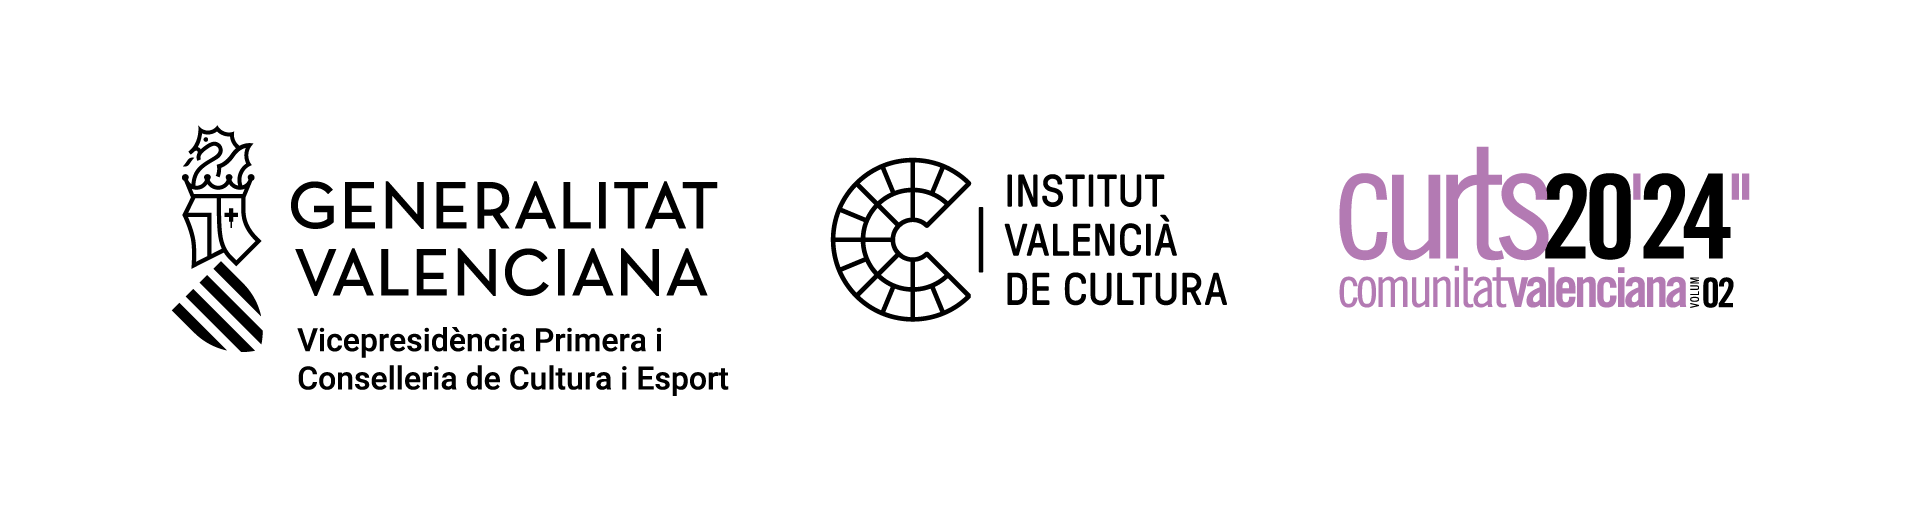 Logotipo Curts 2024 IVC